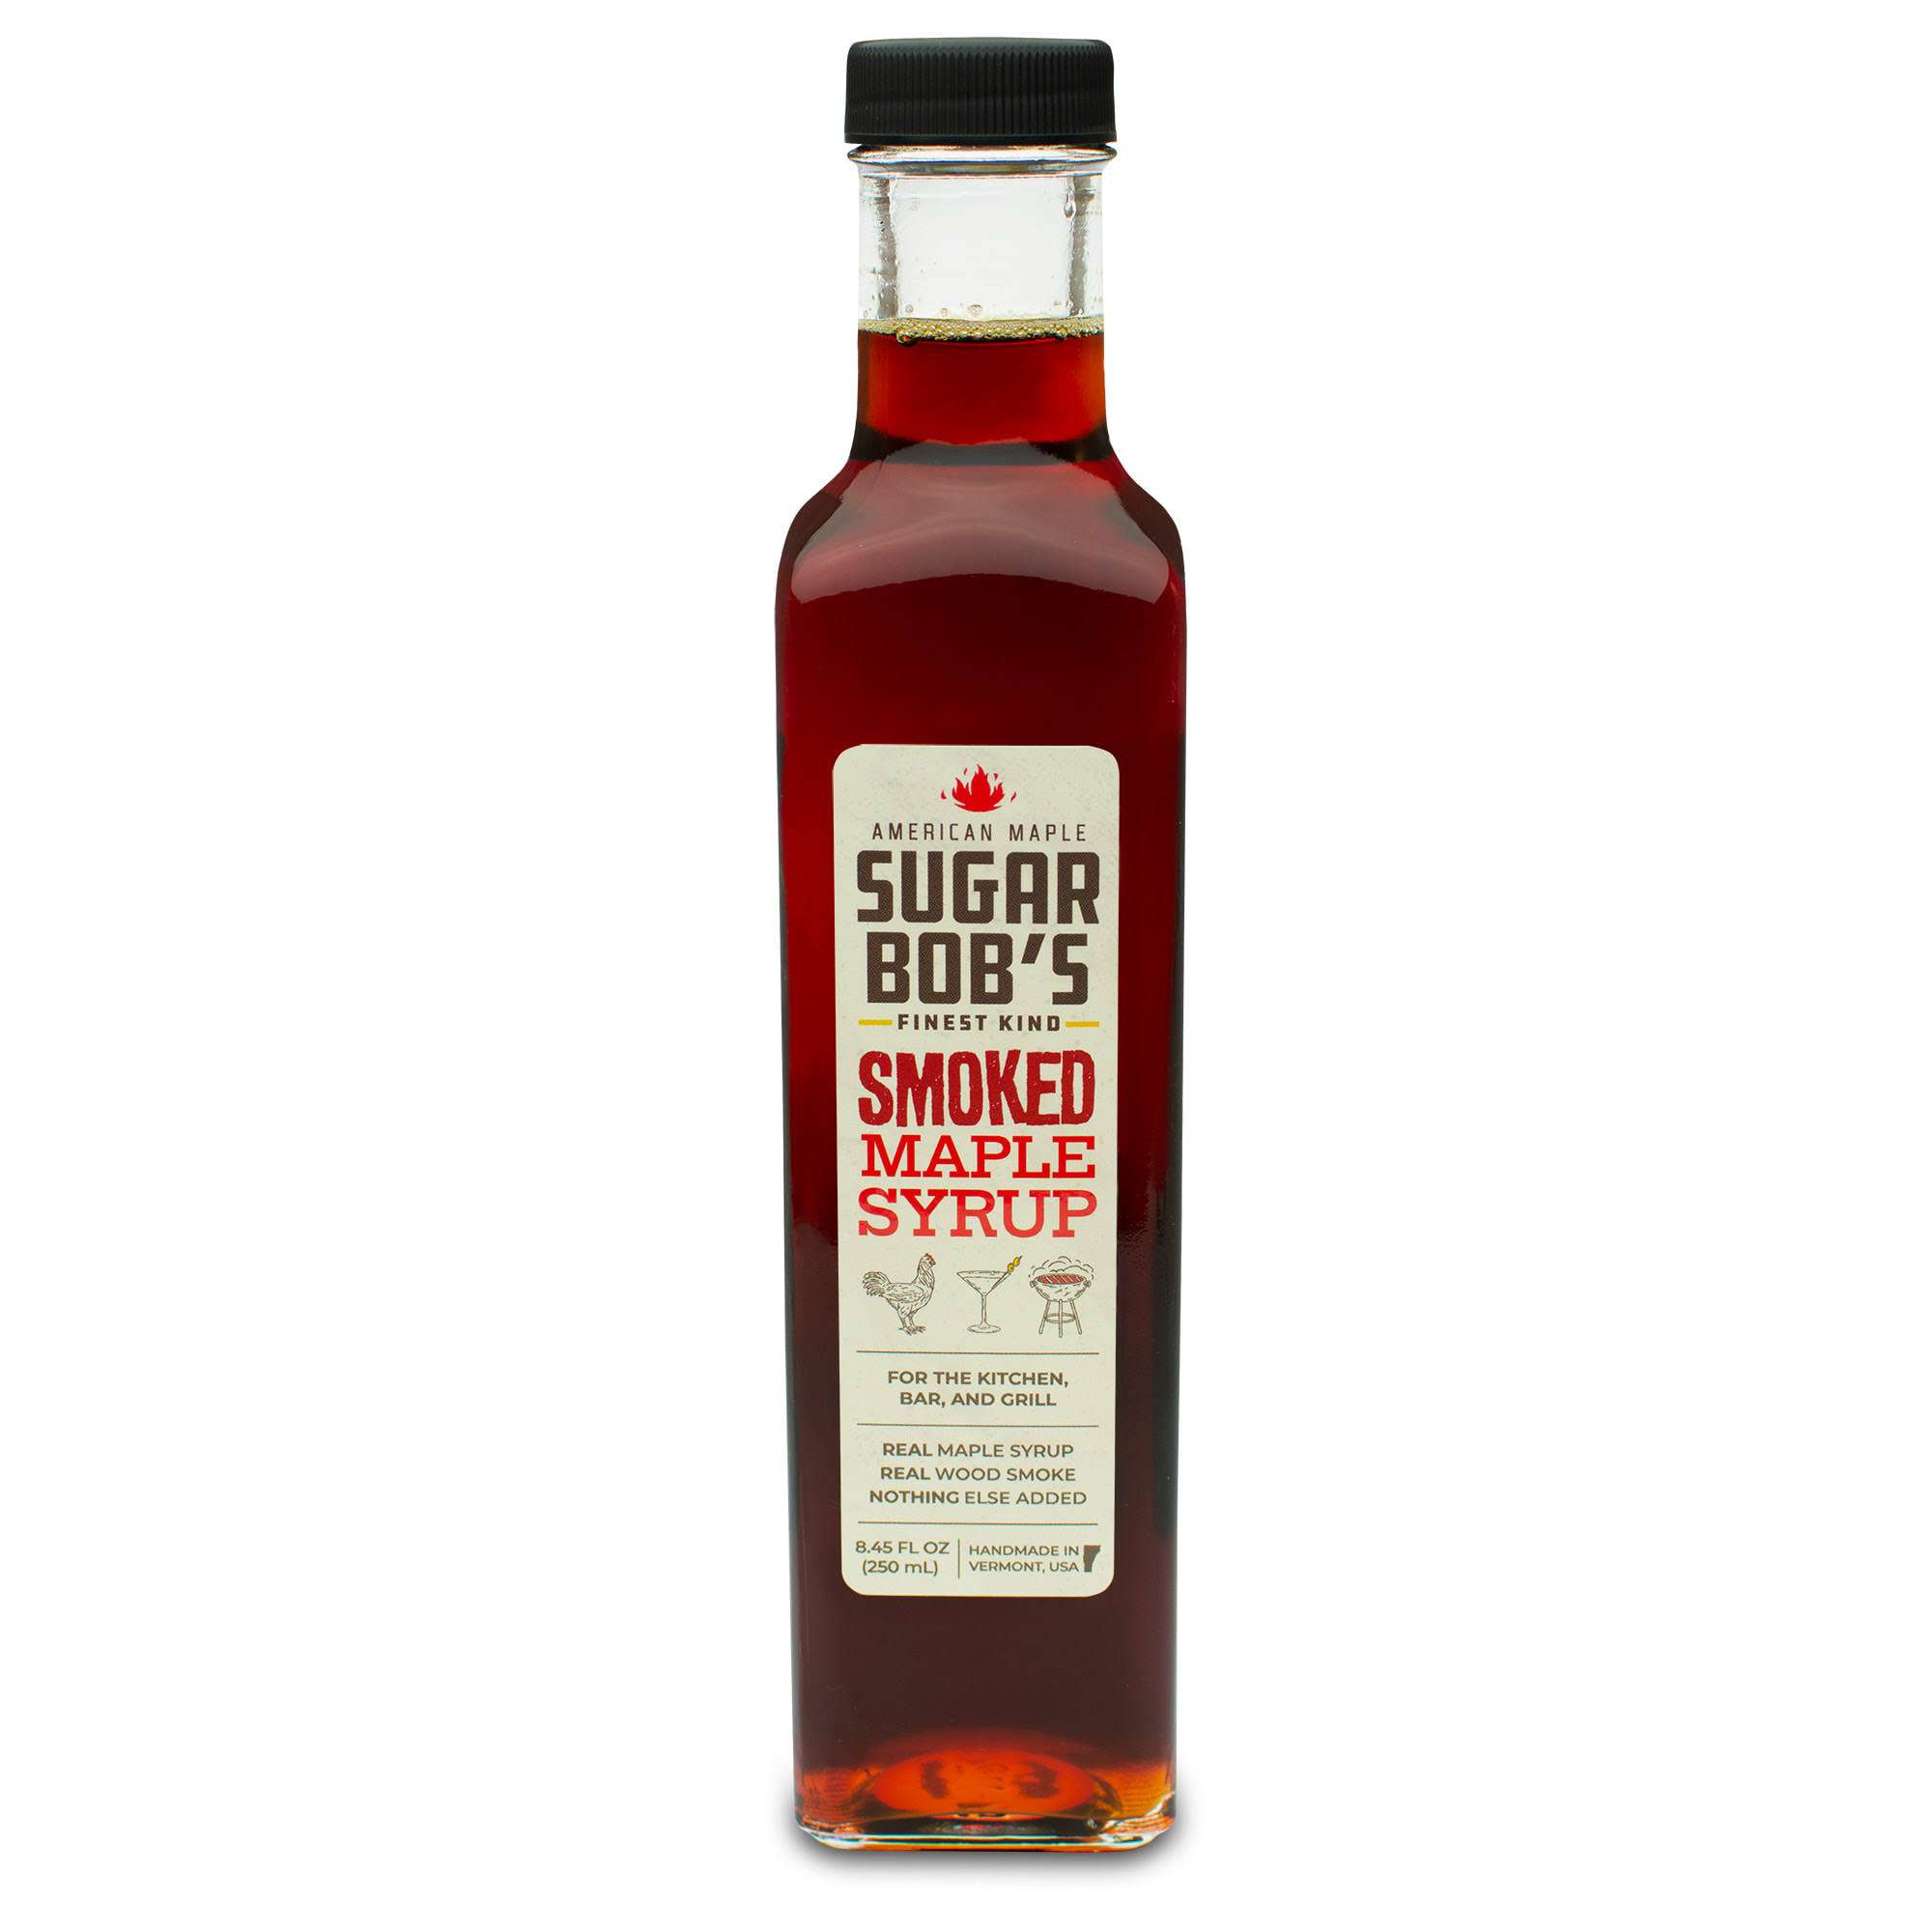 Sugar Bob's Finest Kind Smoked Maple Syrup - 8.45 fl oz